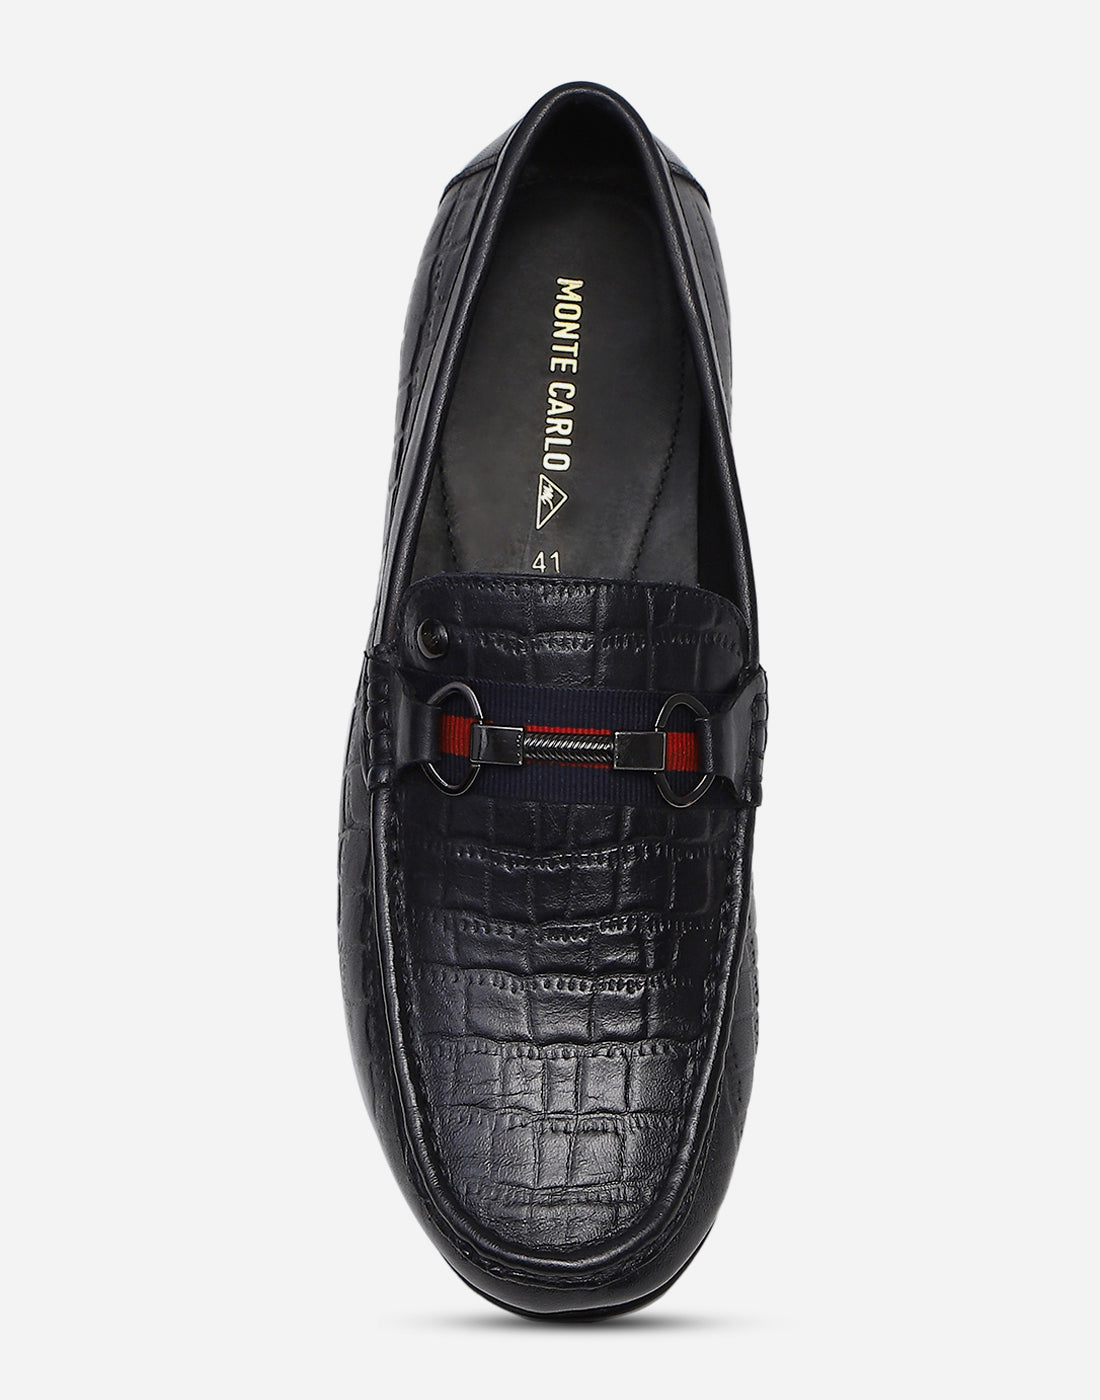 Men Navy Blue Slip on Genuine Leather Loafers